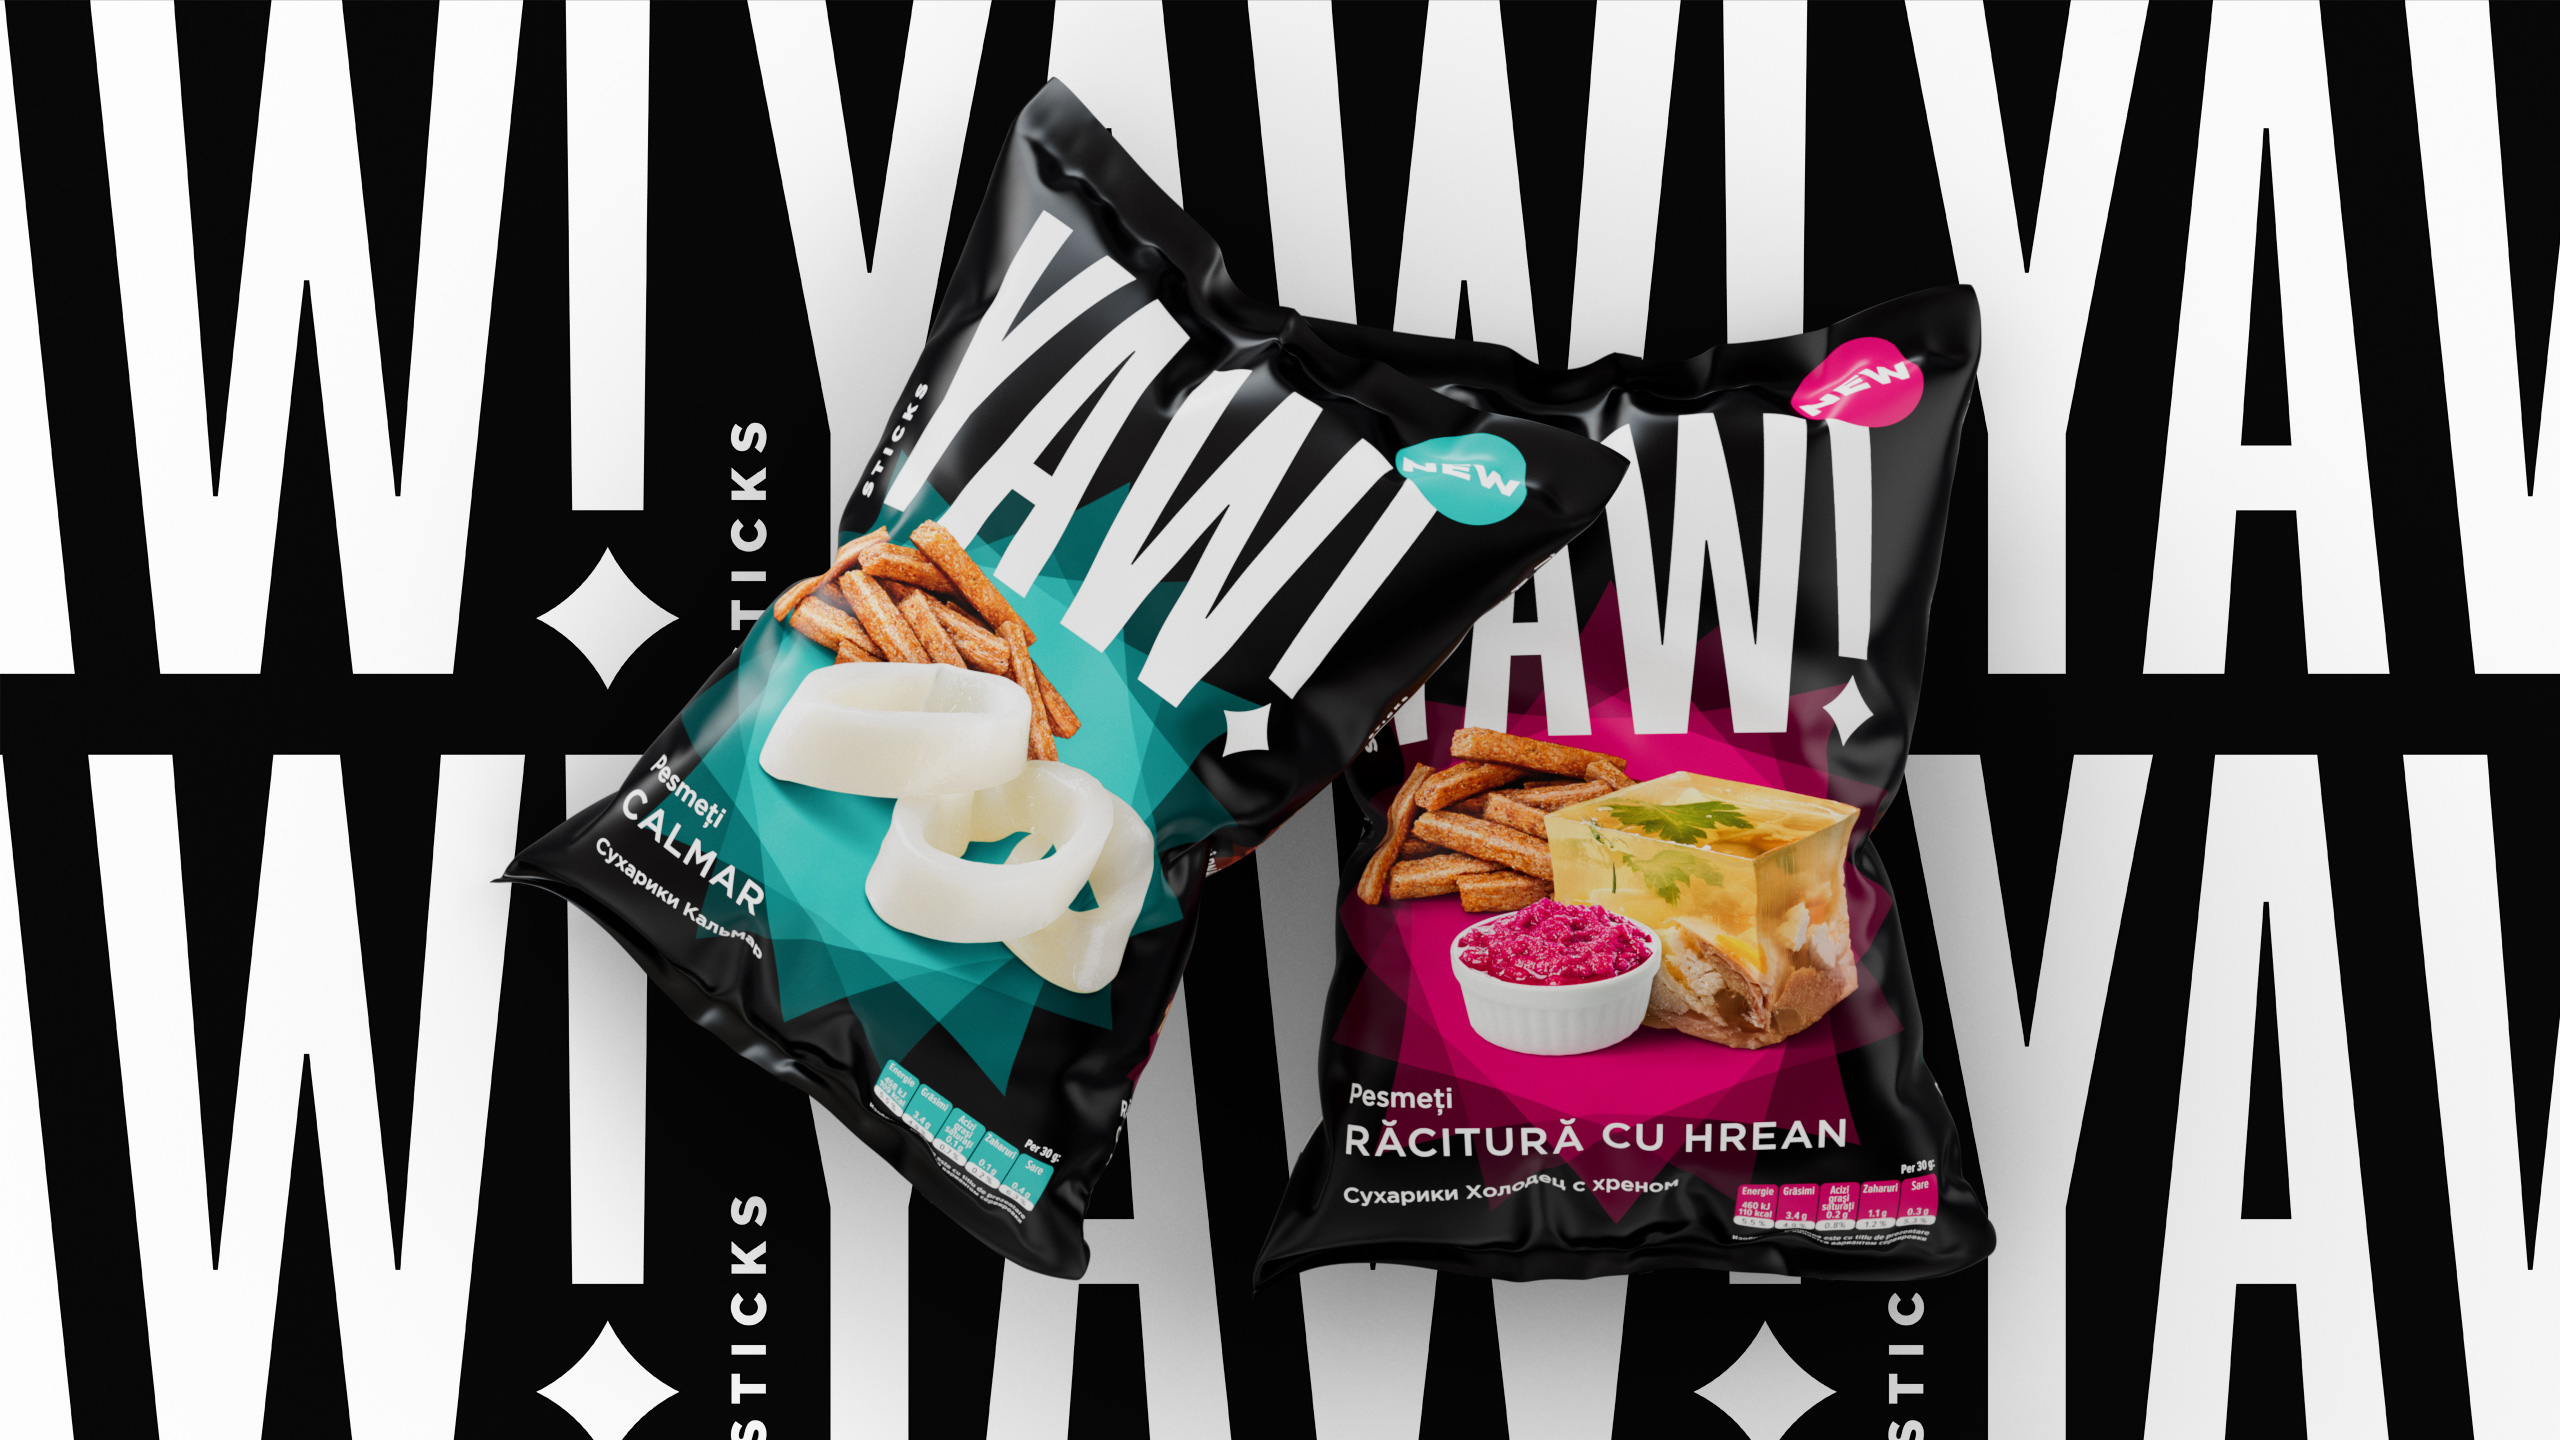 DOZEN created a wow visualization for salty snacks YAW